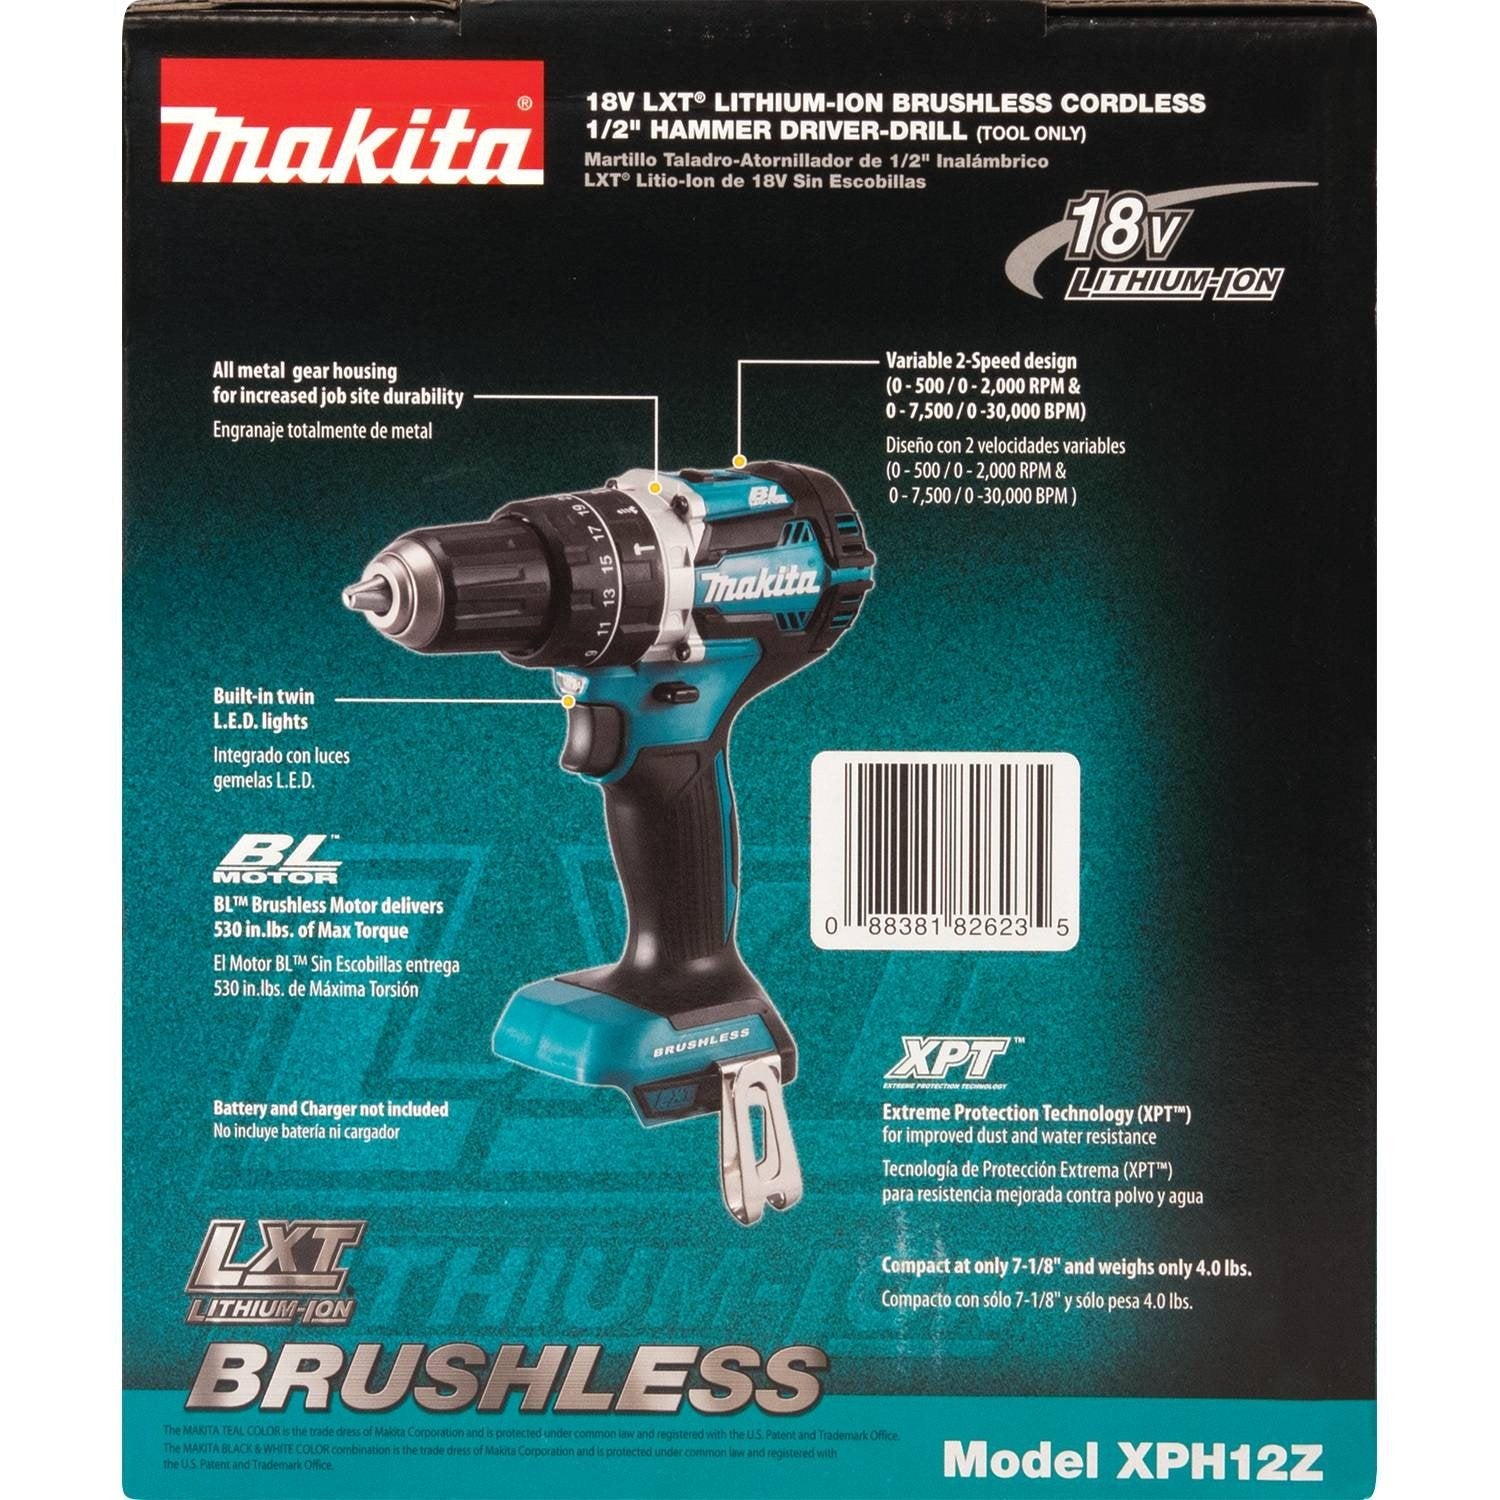 Makita XPH12Z 18V LXT Lithium-Ion Brushless Cordless 1/2" Hammer Driver-Drill,